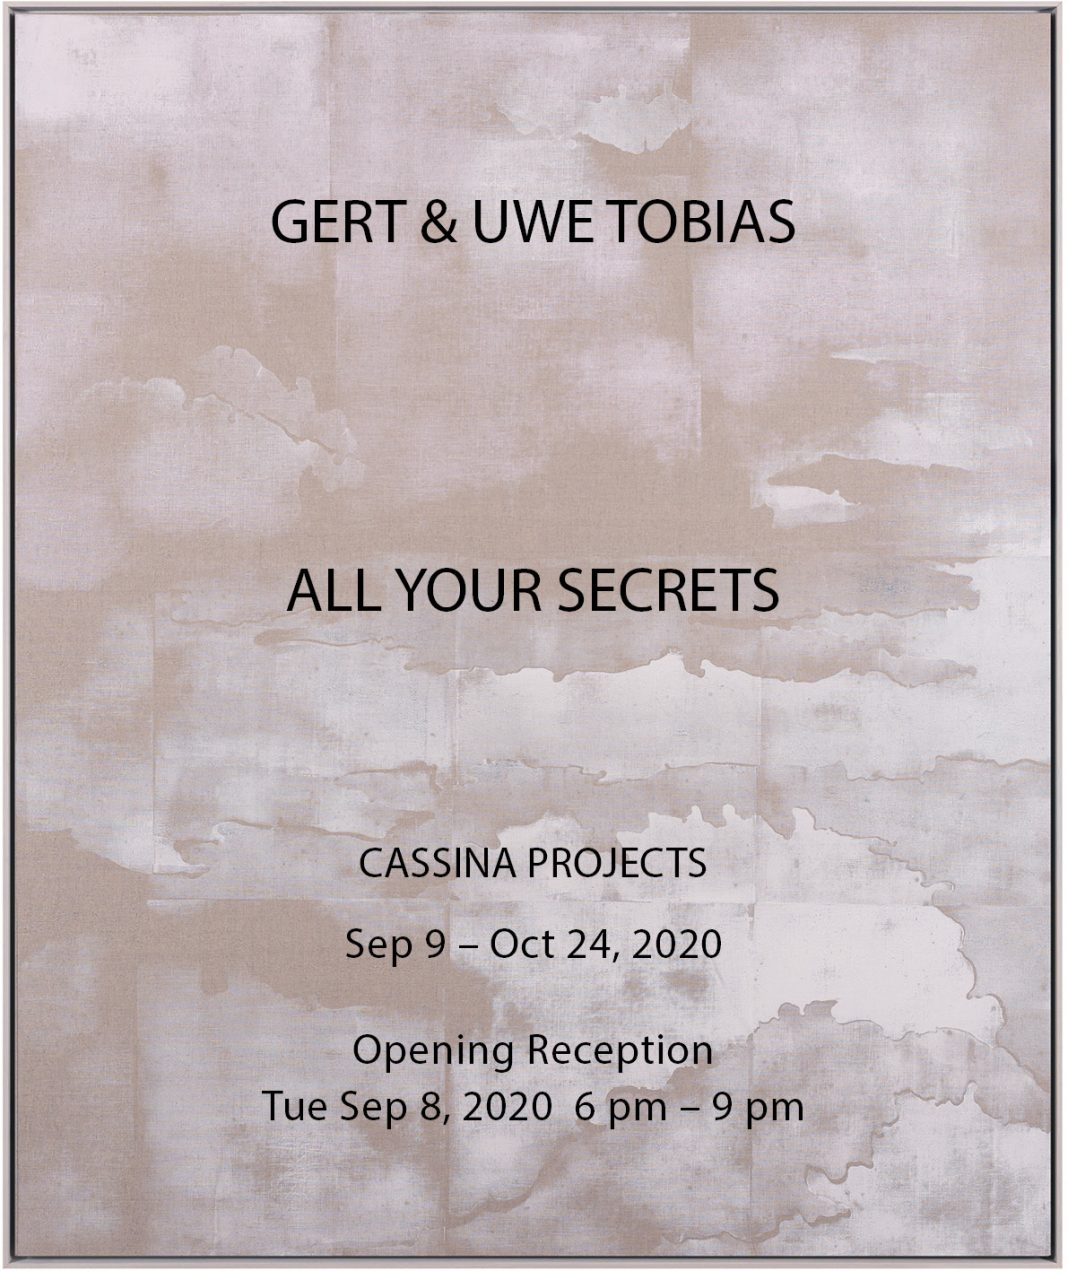 Gert & Uwe Tobias – All Your Secretshttps://www.exibart.com/repository/media/formidable/11/Gert-Uwe-Tobias-All-Your-Secrets-1068x1271.jpg